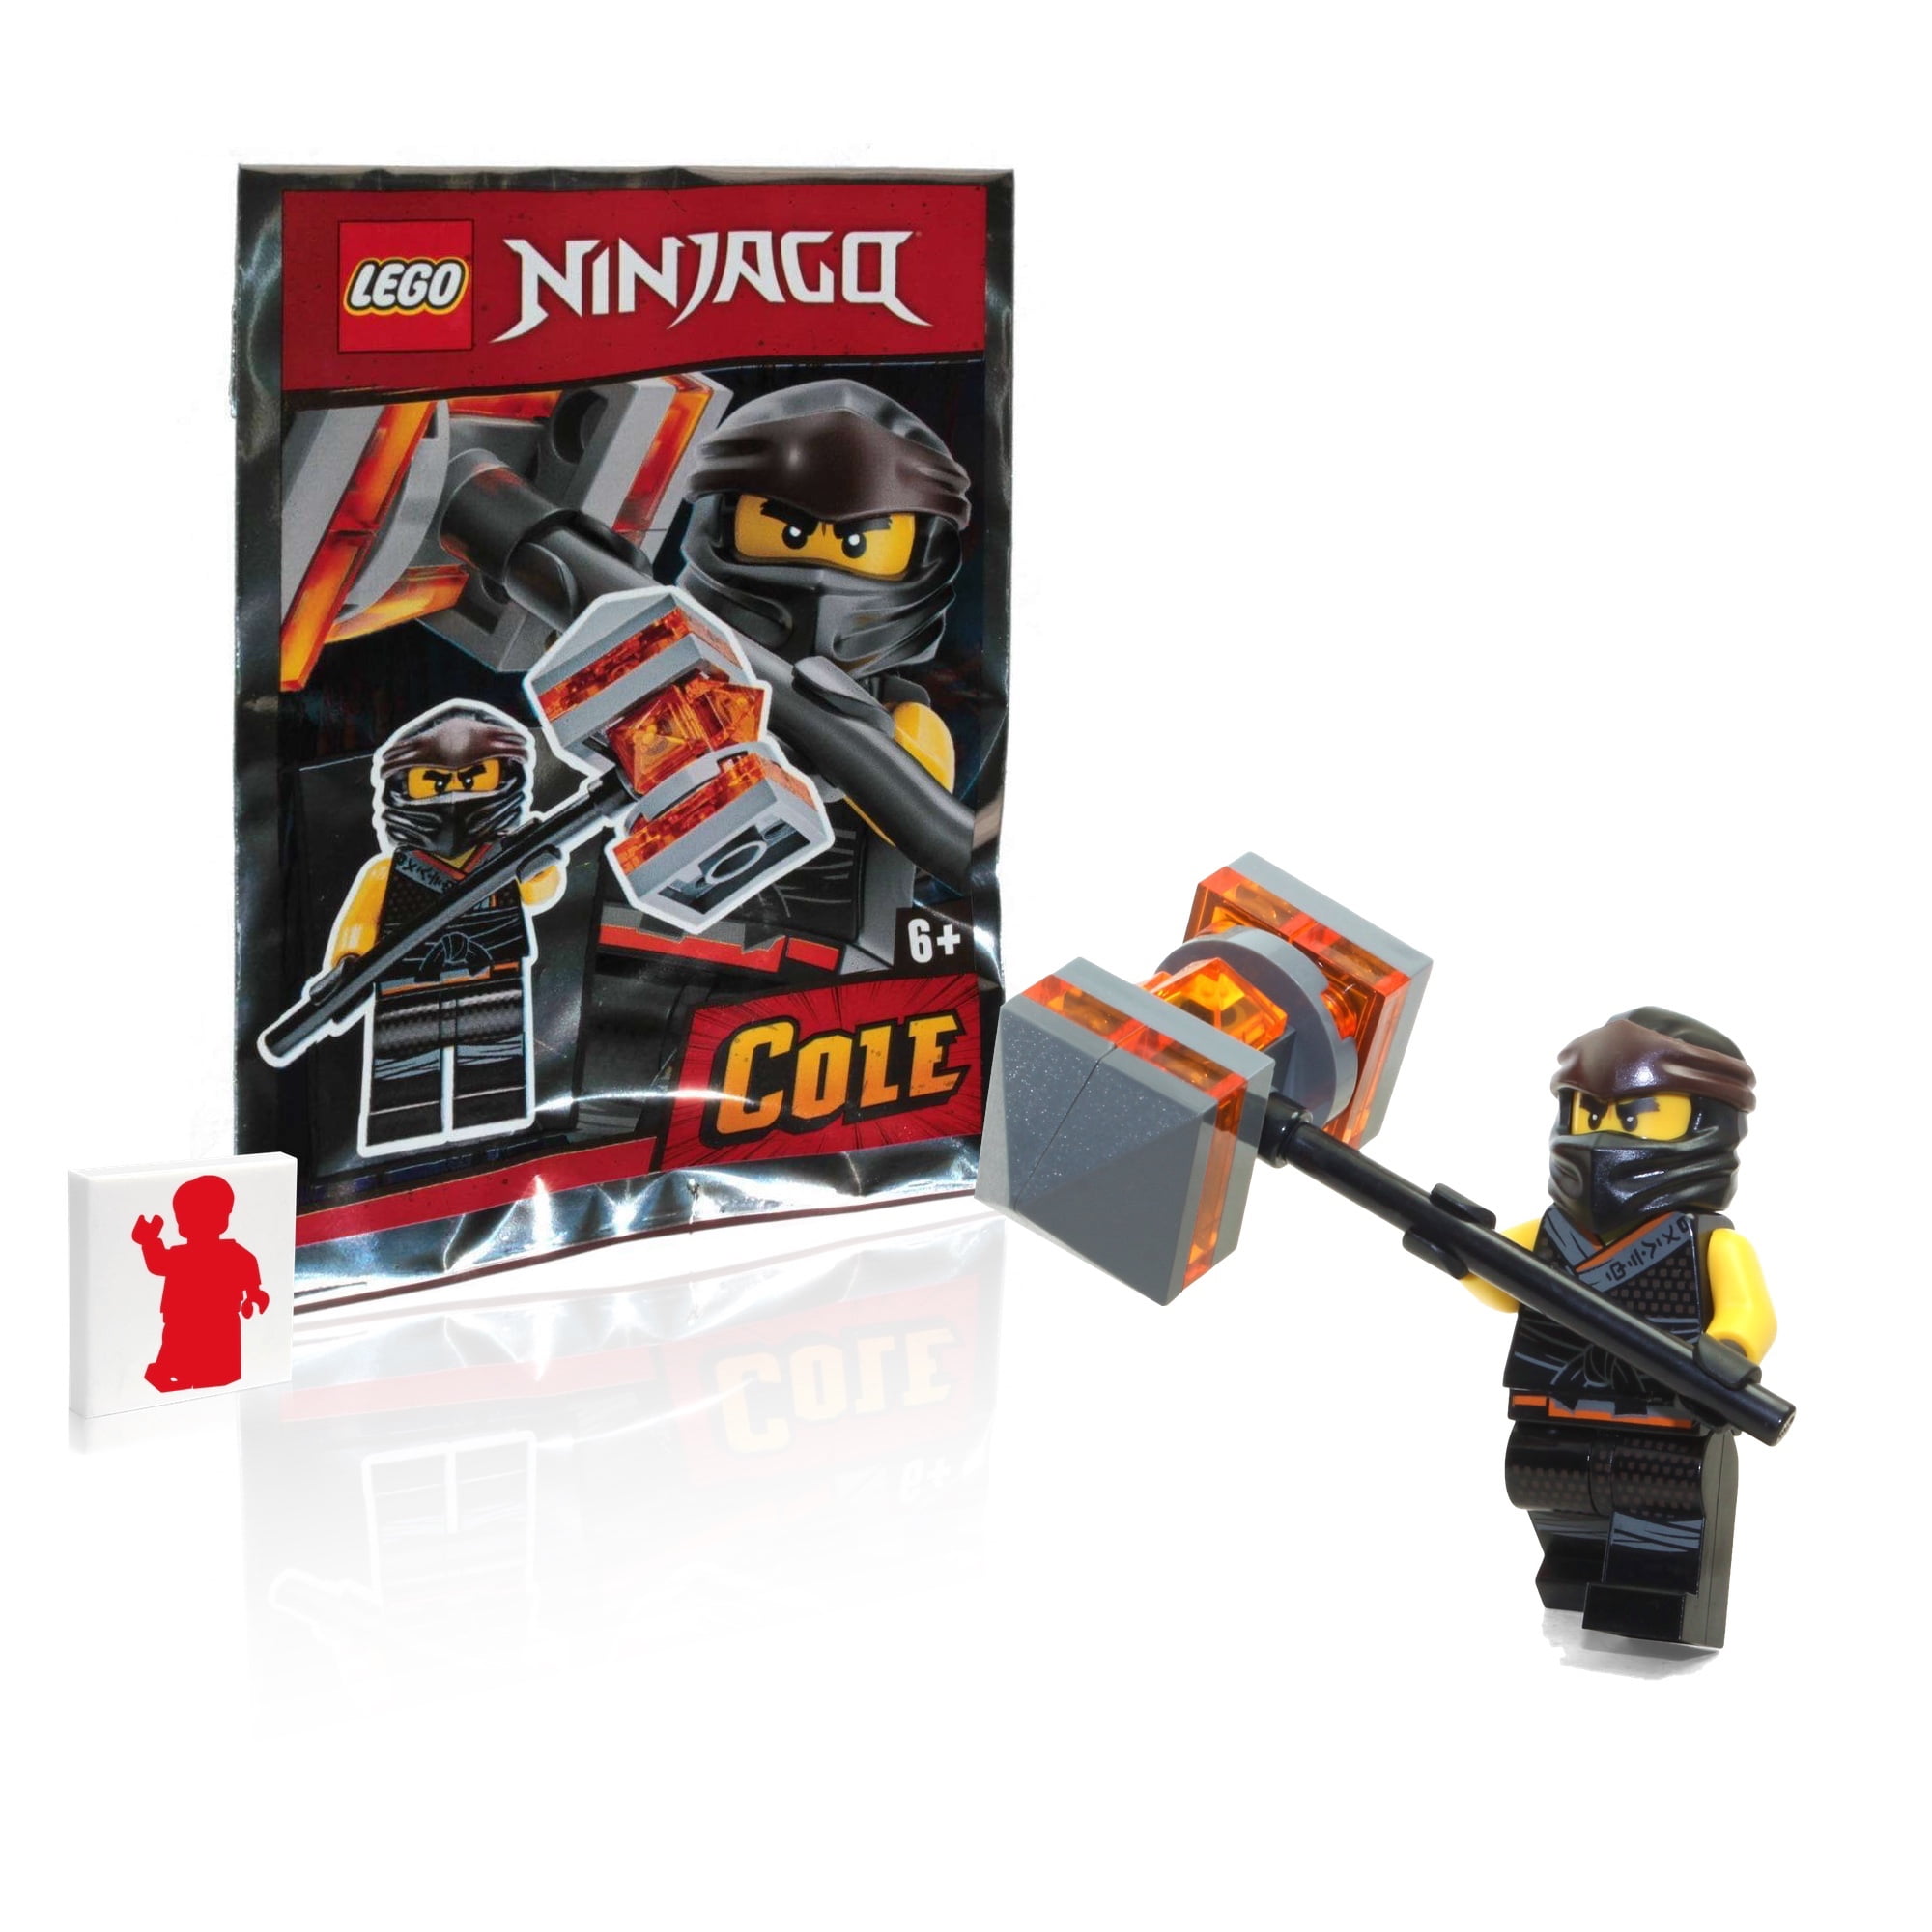 Lego figure polybag limited seals minifigurine ninjago cole with hammer v3 